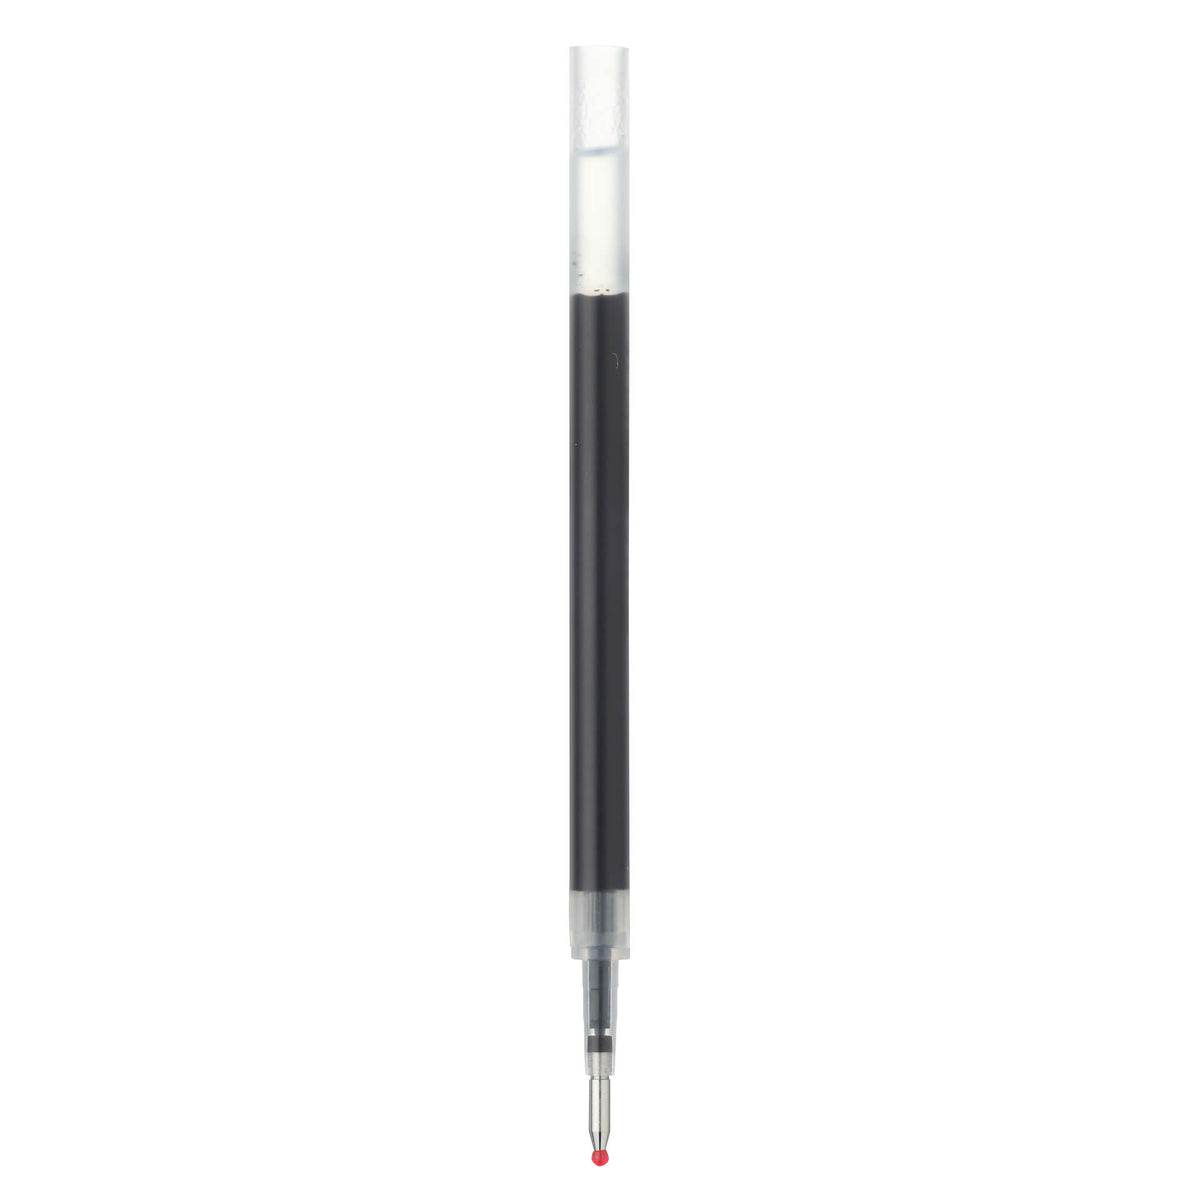 MUJI Gel Ink Ballpoint Pen Smoothly Knock Type Brown Water Based 0.5mm 5 Set